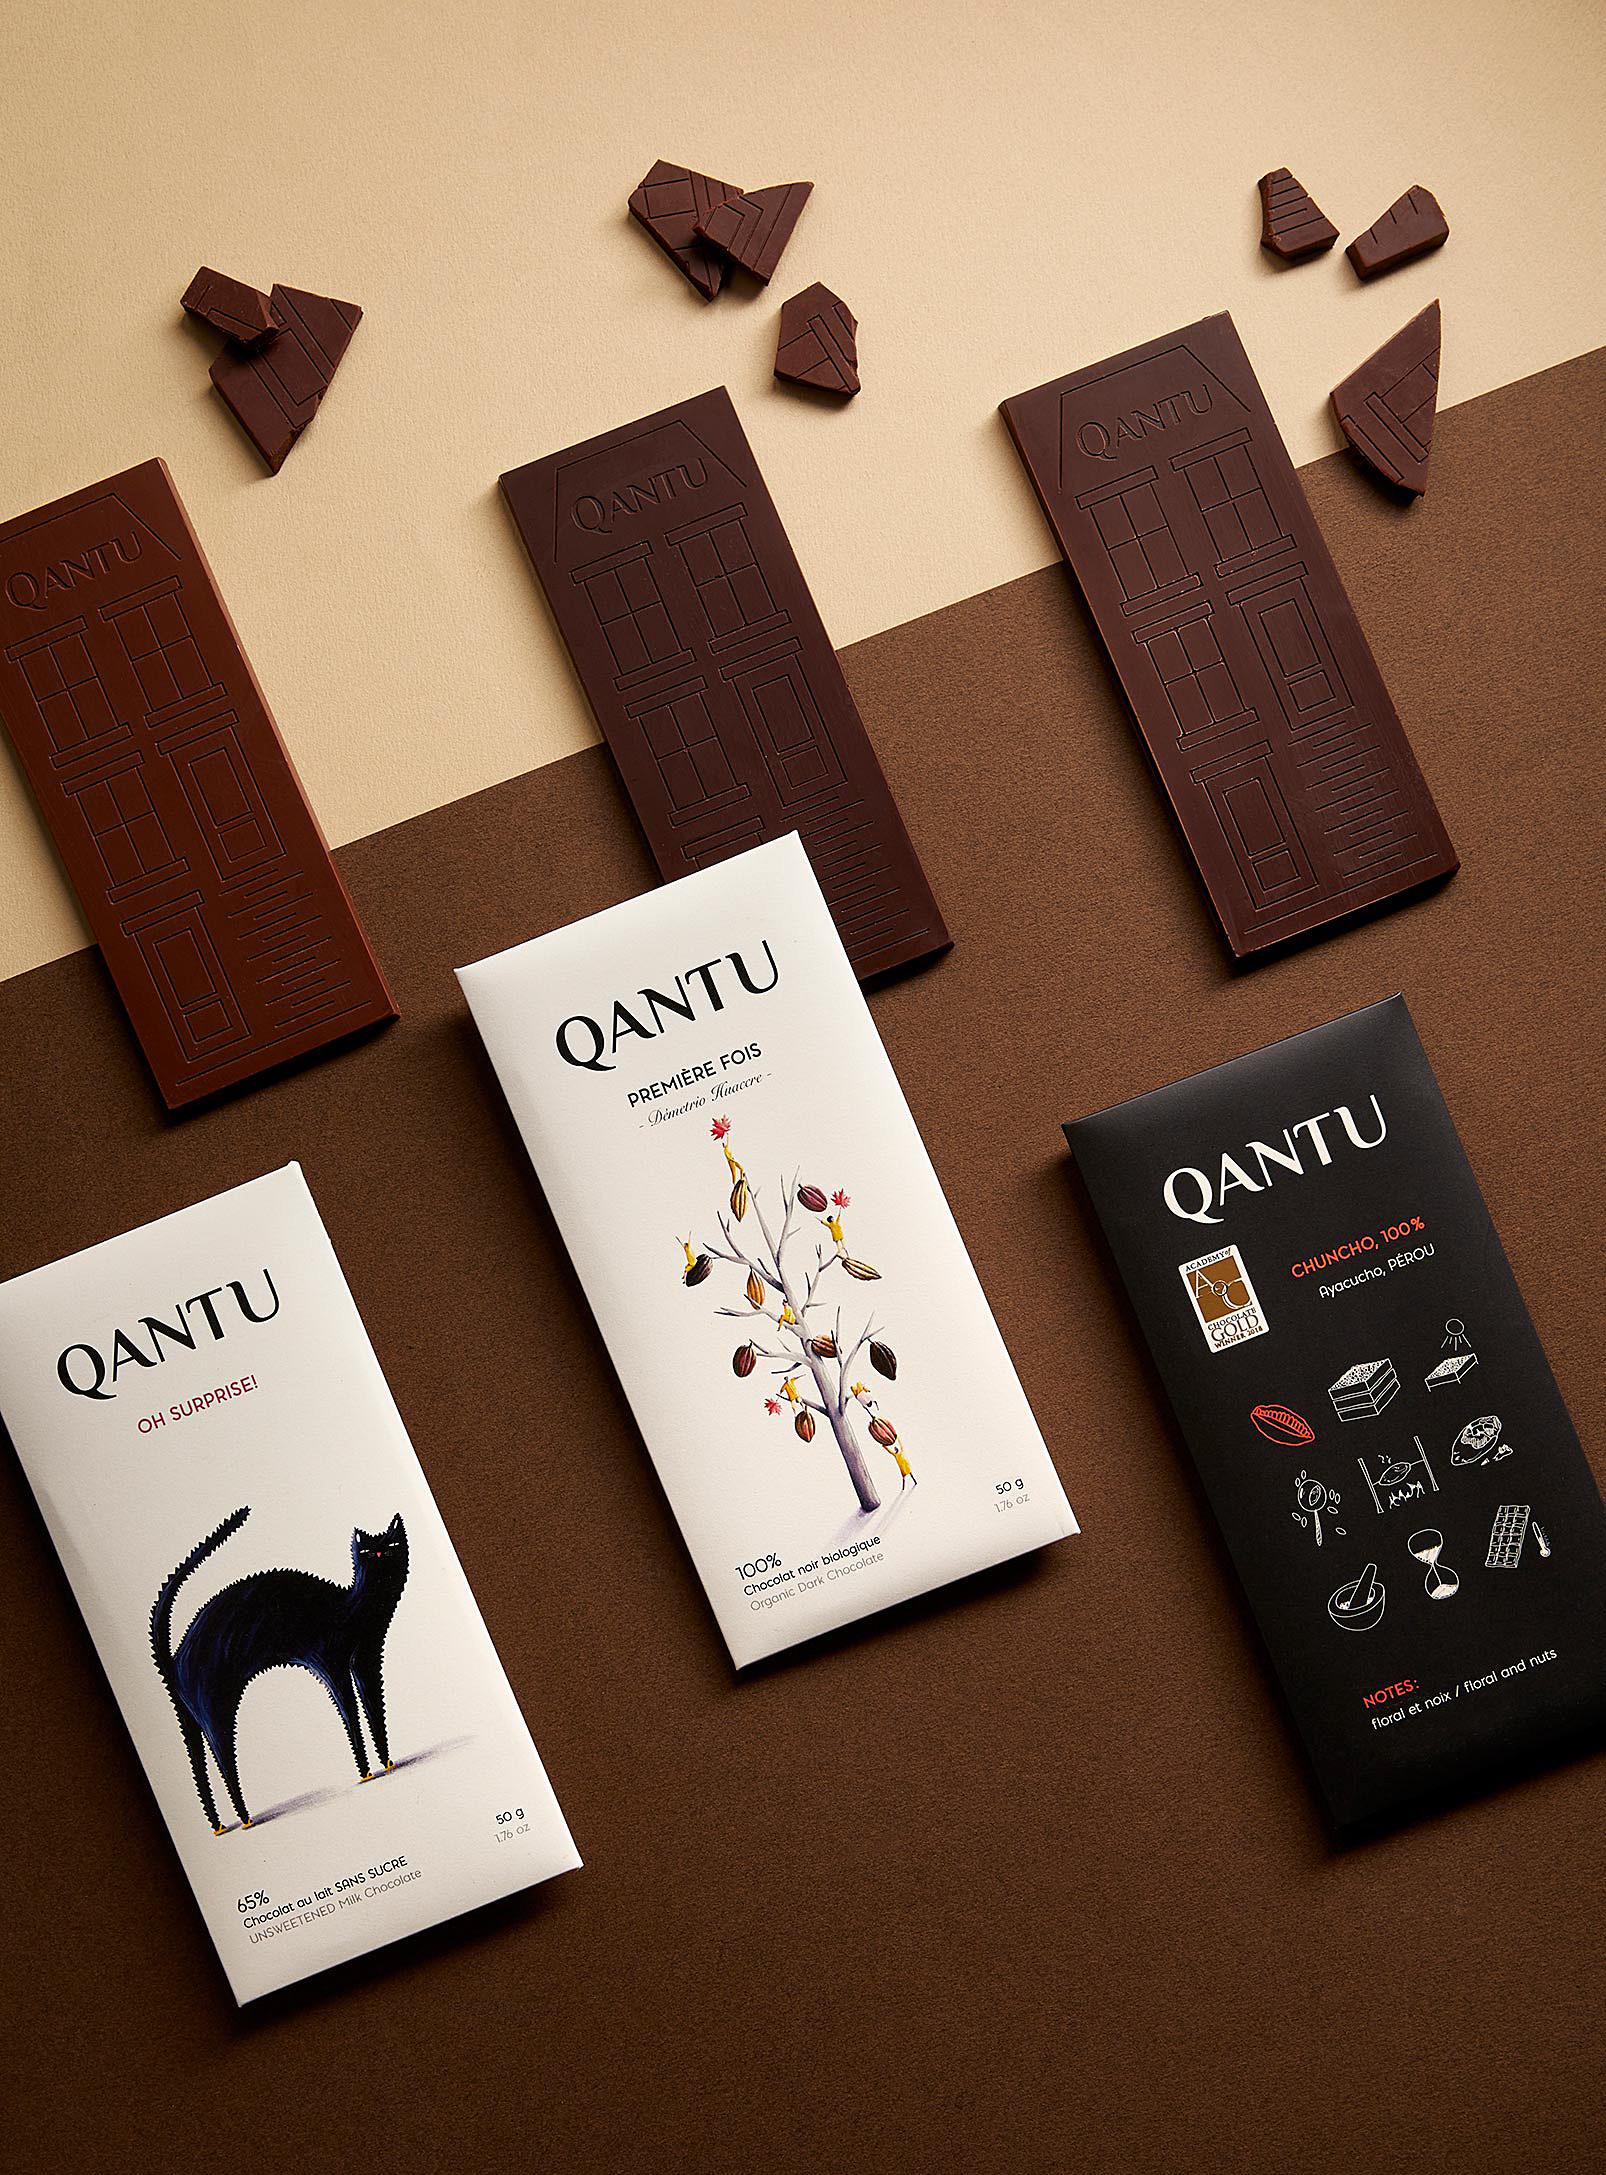 Qantu - Set of three chocolate bars with no added sugar